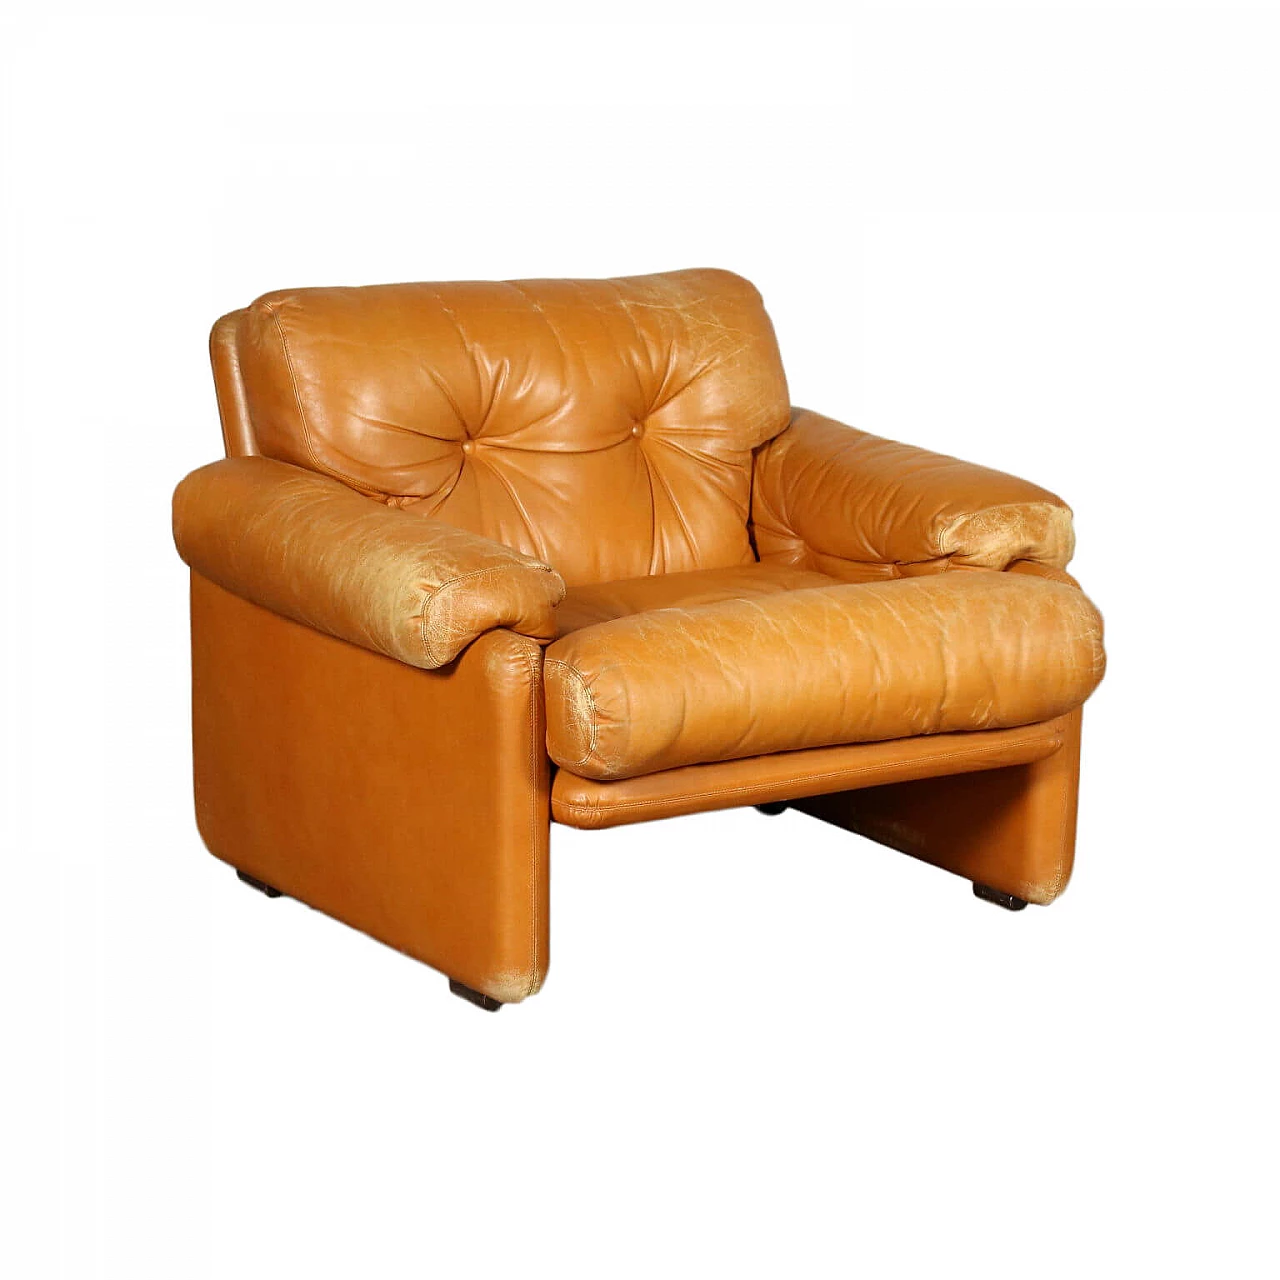 Coronado leather armchair by Tobia Scarpa for B&B, 70s 1212187